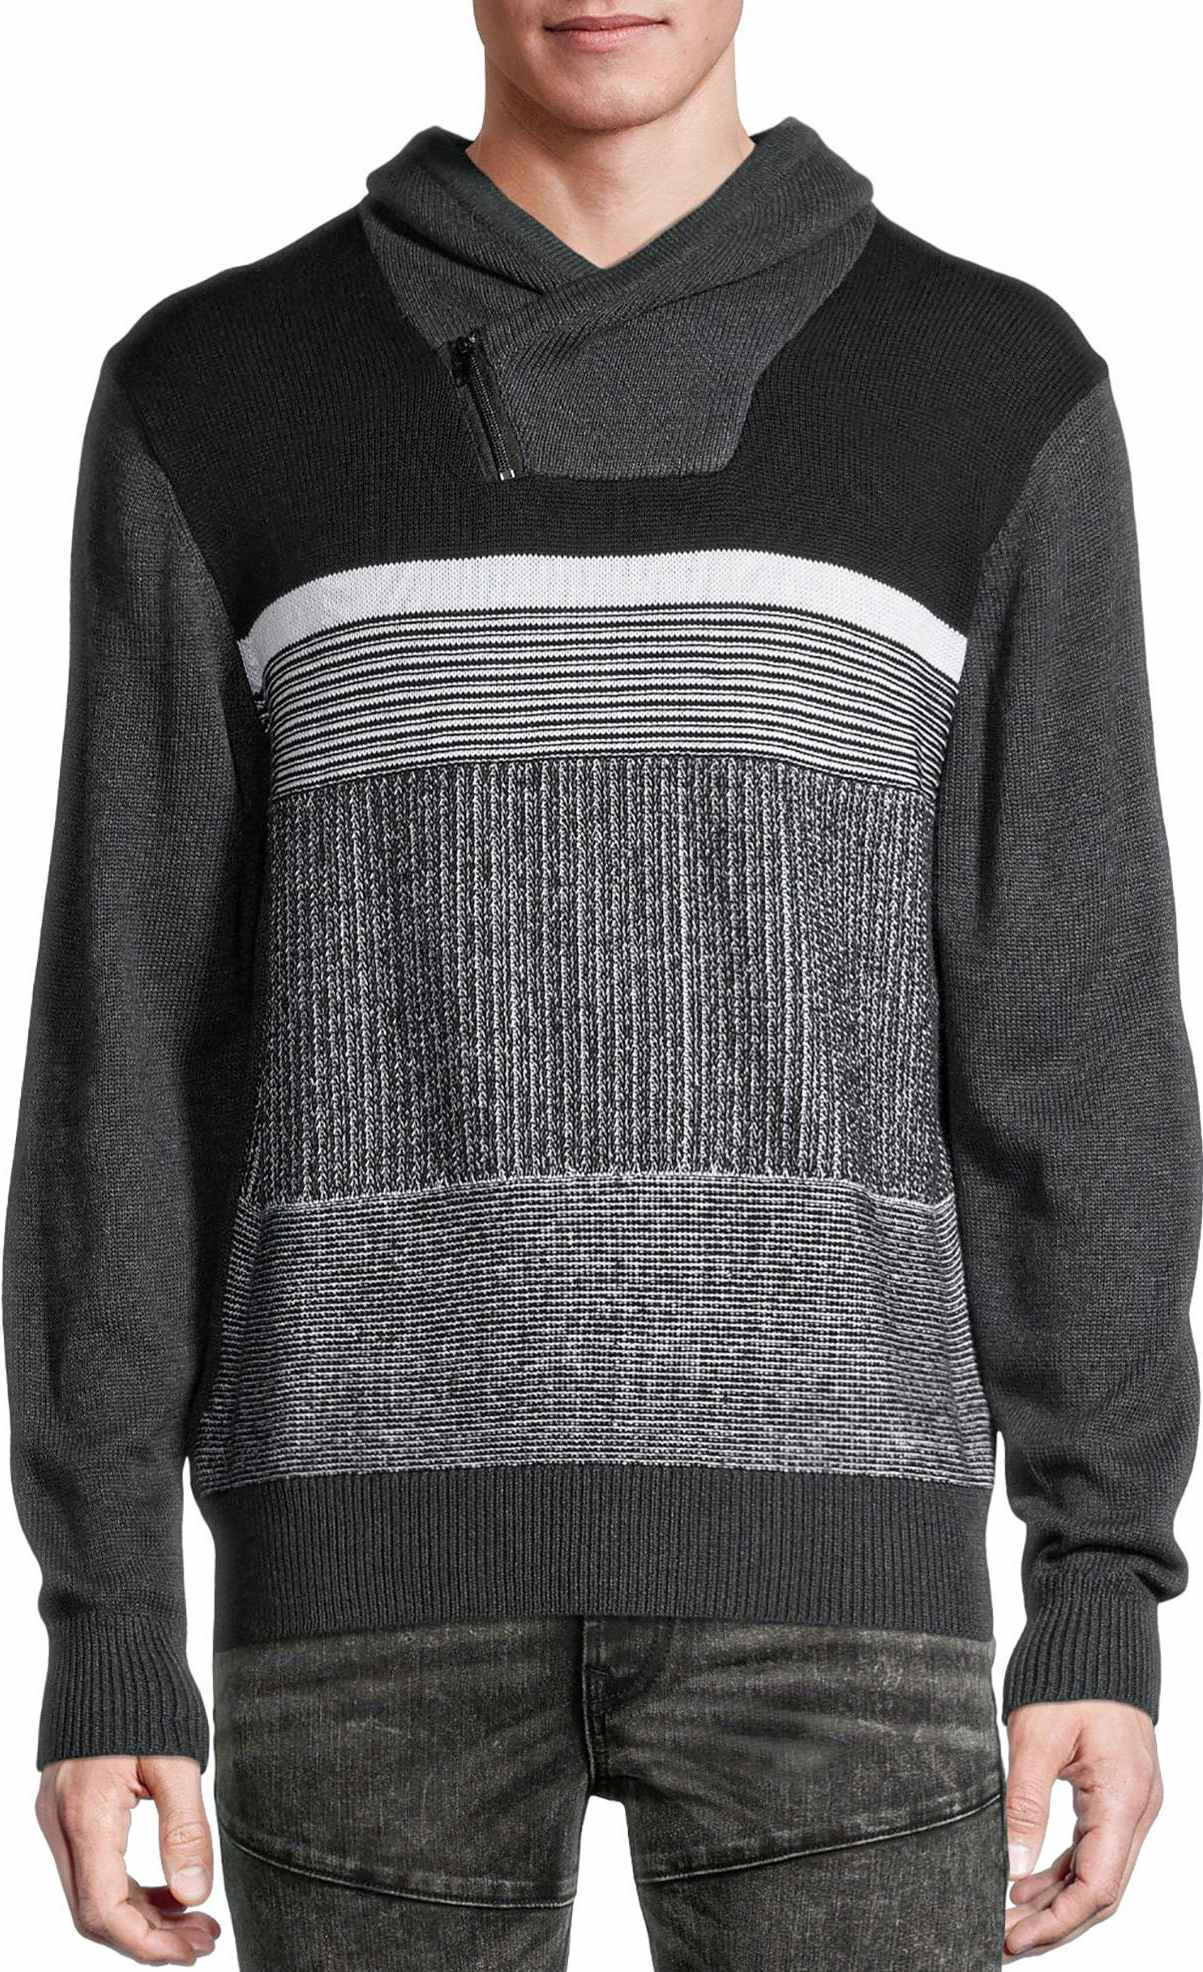 walmart-tribekka-44-hooded-striped-sweater-2022